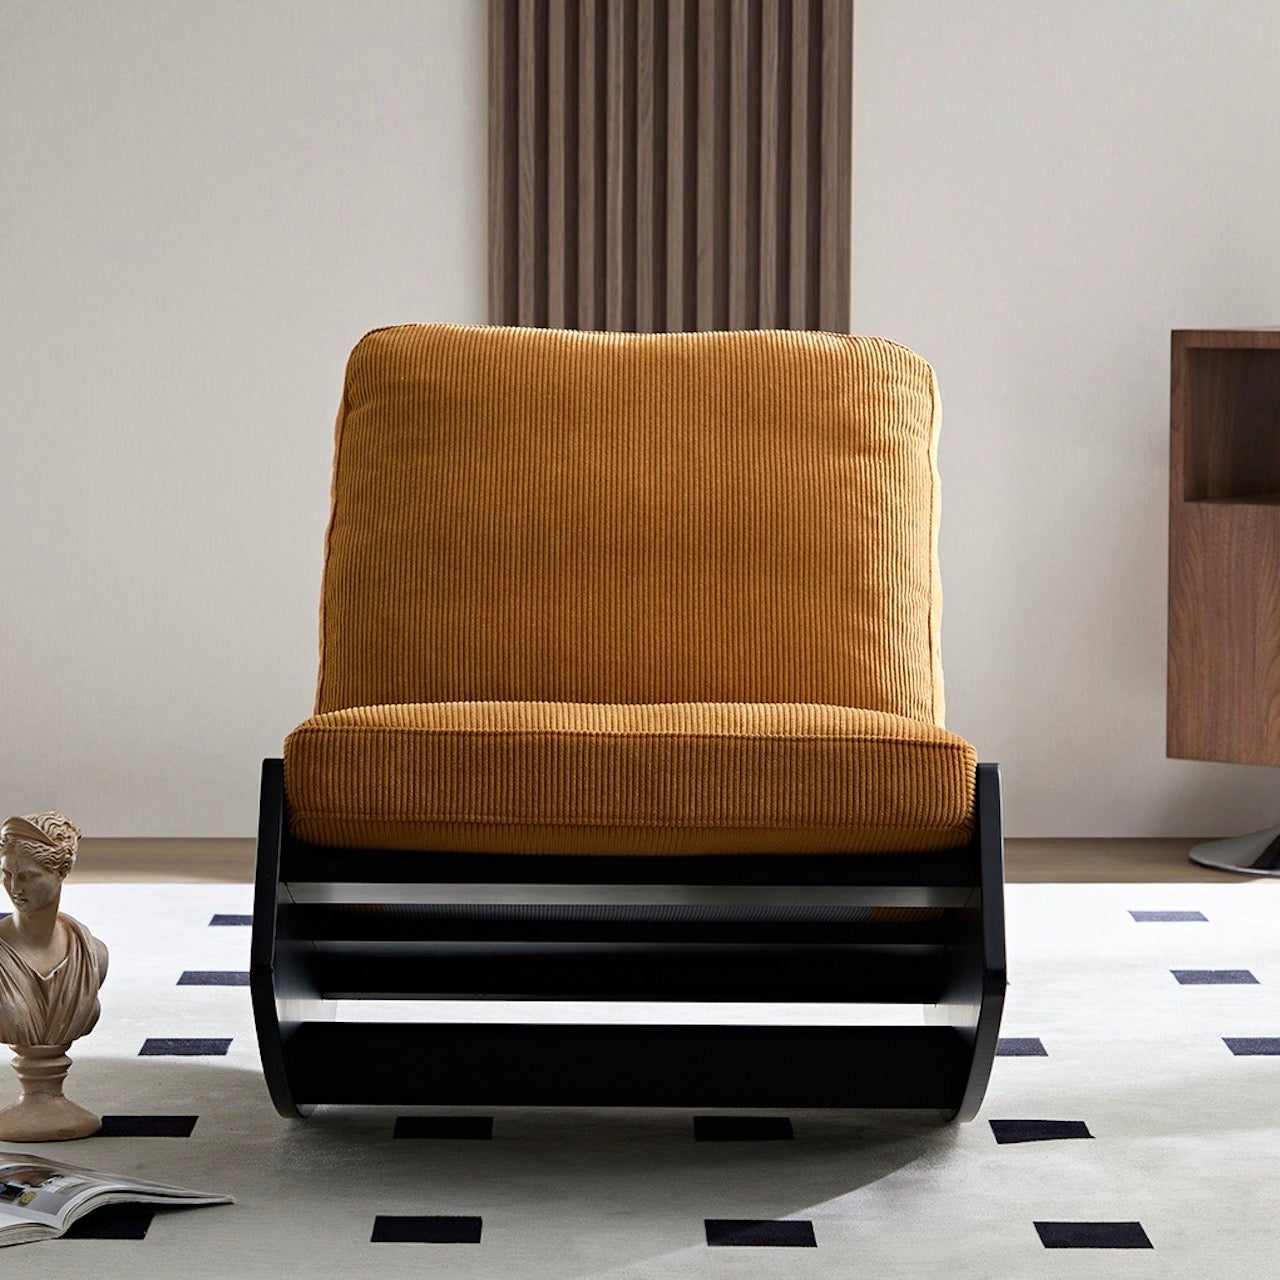 Vibrant Yellow Corduroy Rocking Lounge Chair for Stylish Comfort